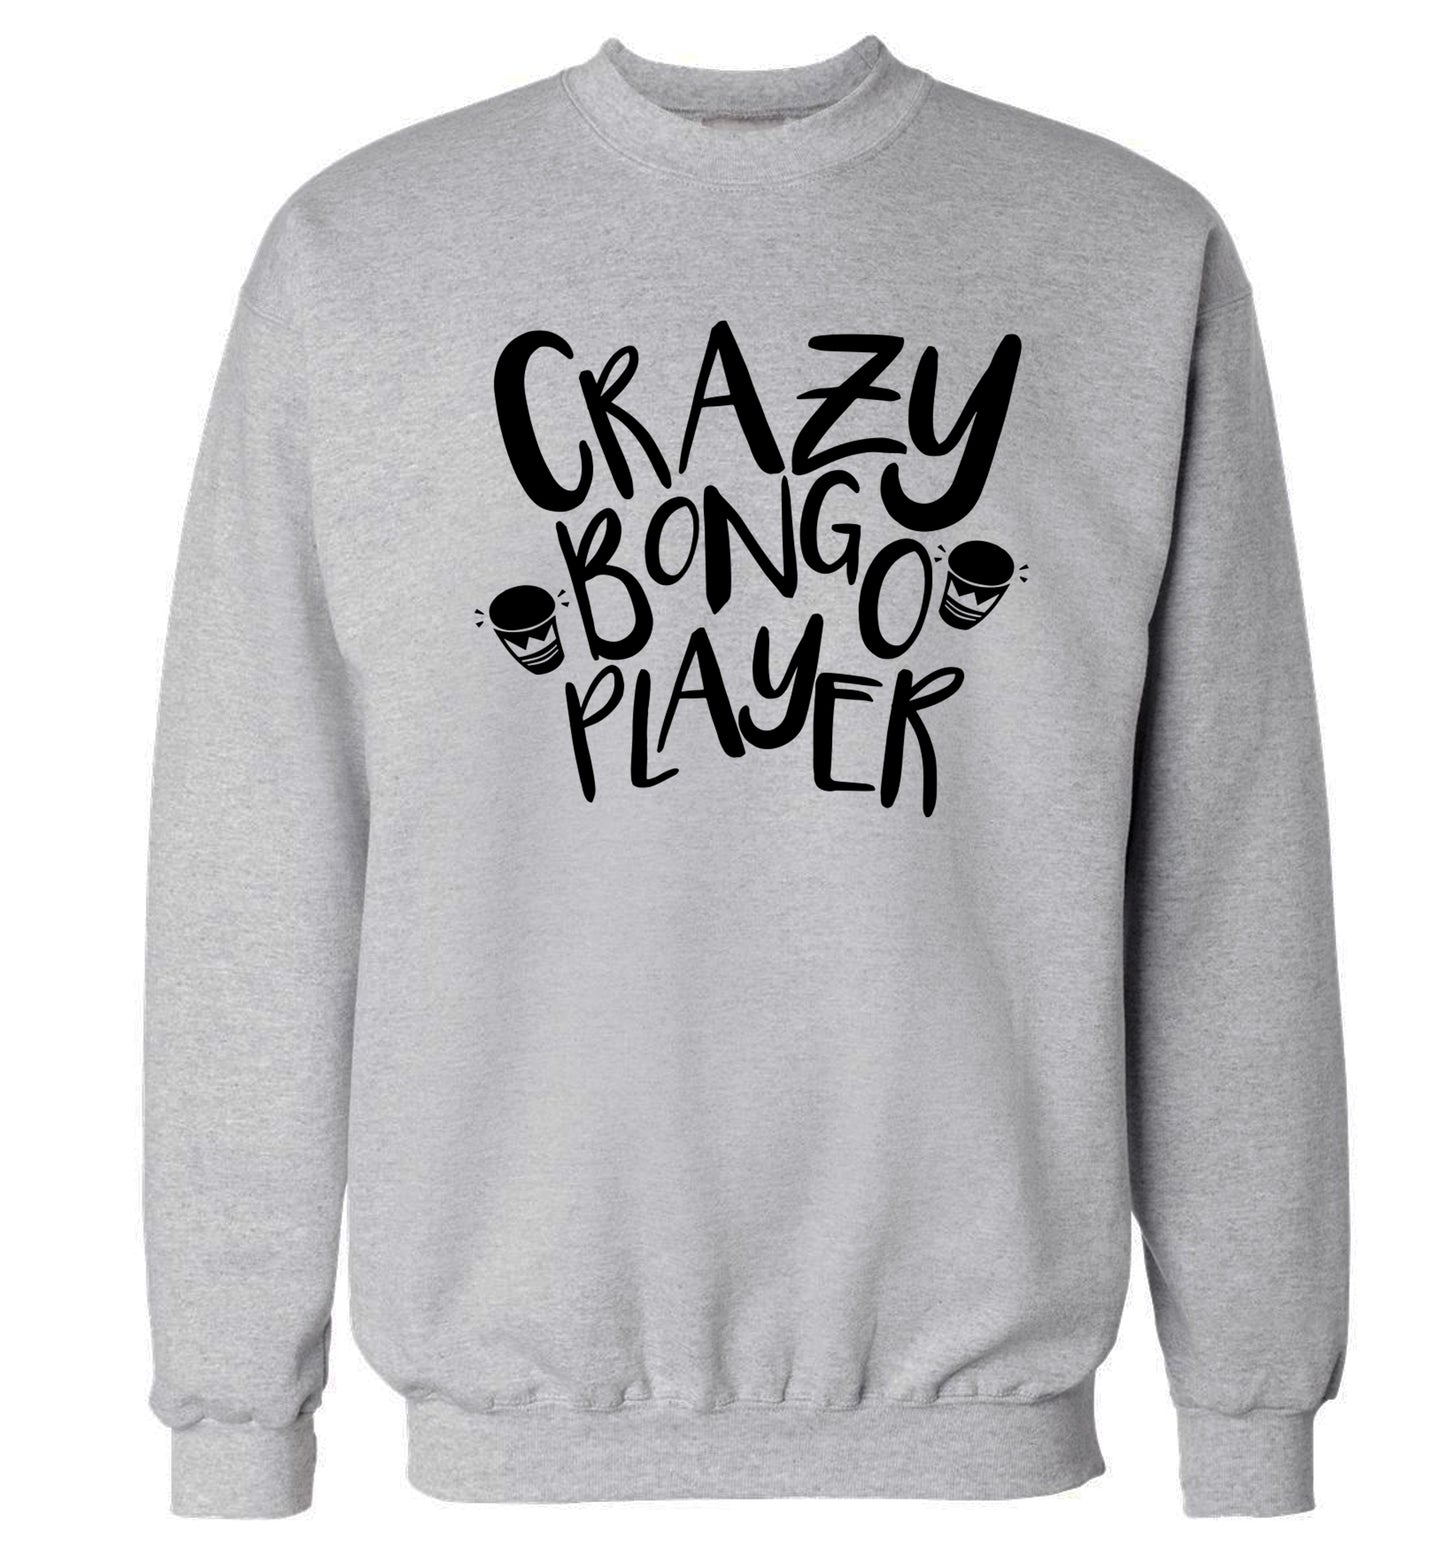 Crazy bongo player Adult's unisex grey Sweater 2XL